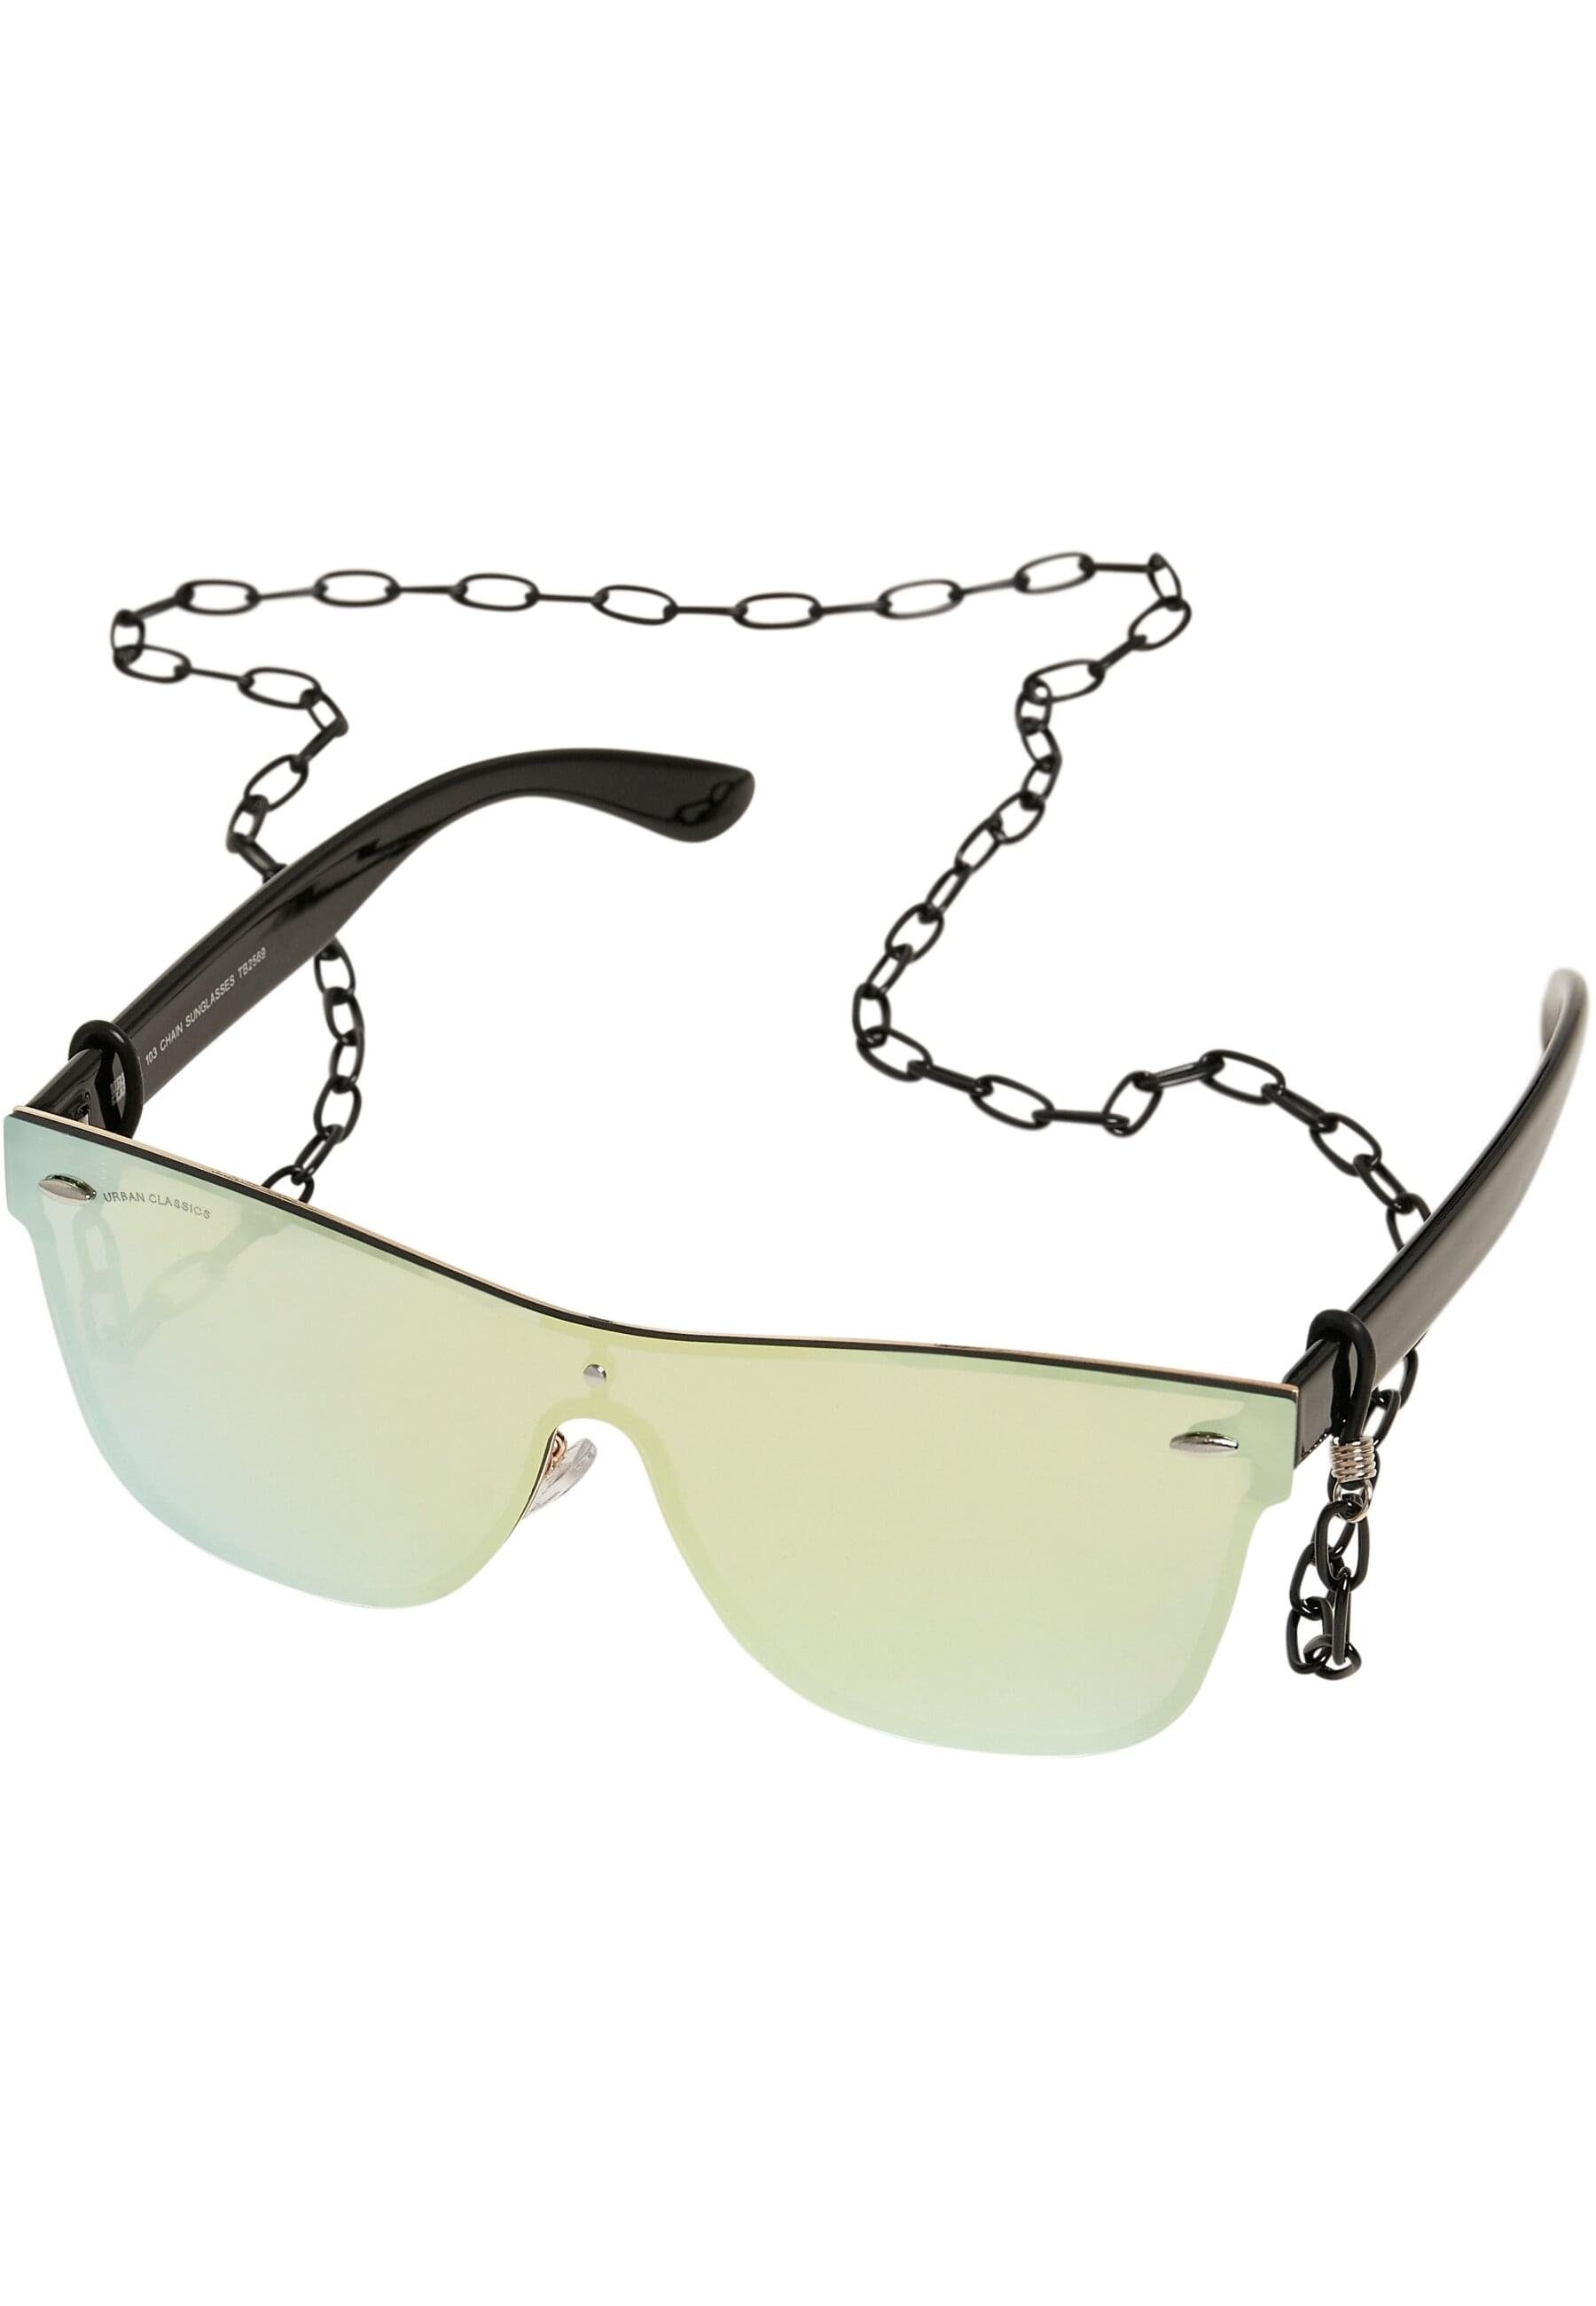 Chain Sonnenbrille Unisex 103 black/gold URBAN CLASSICS Sunglasses mirror